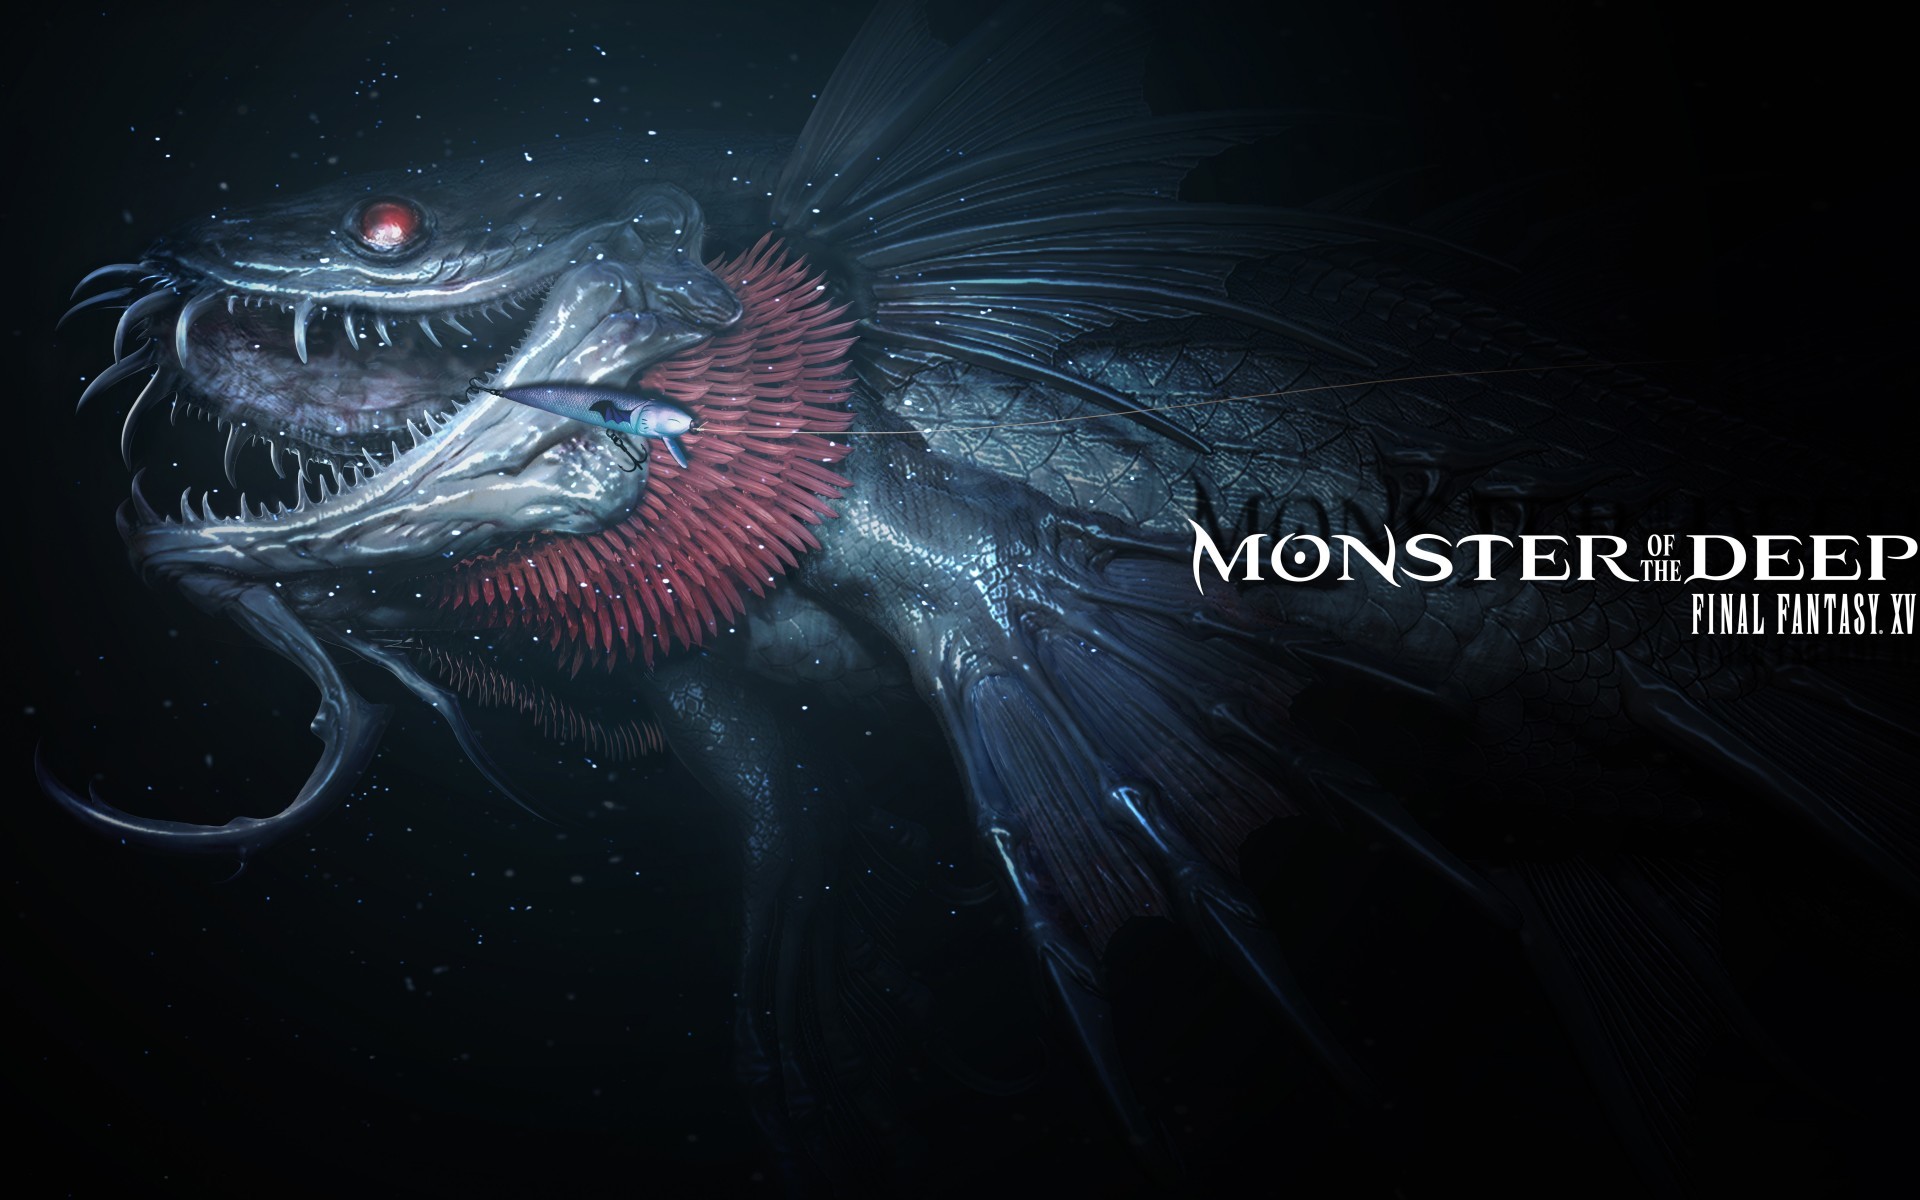 Space / Monster of the Deep Final Fantasy XV Wallpaper